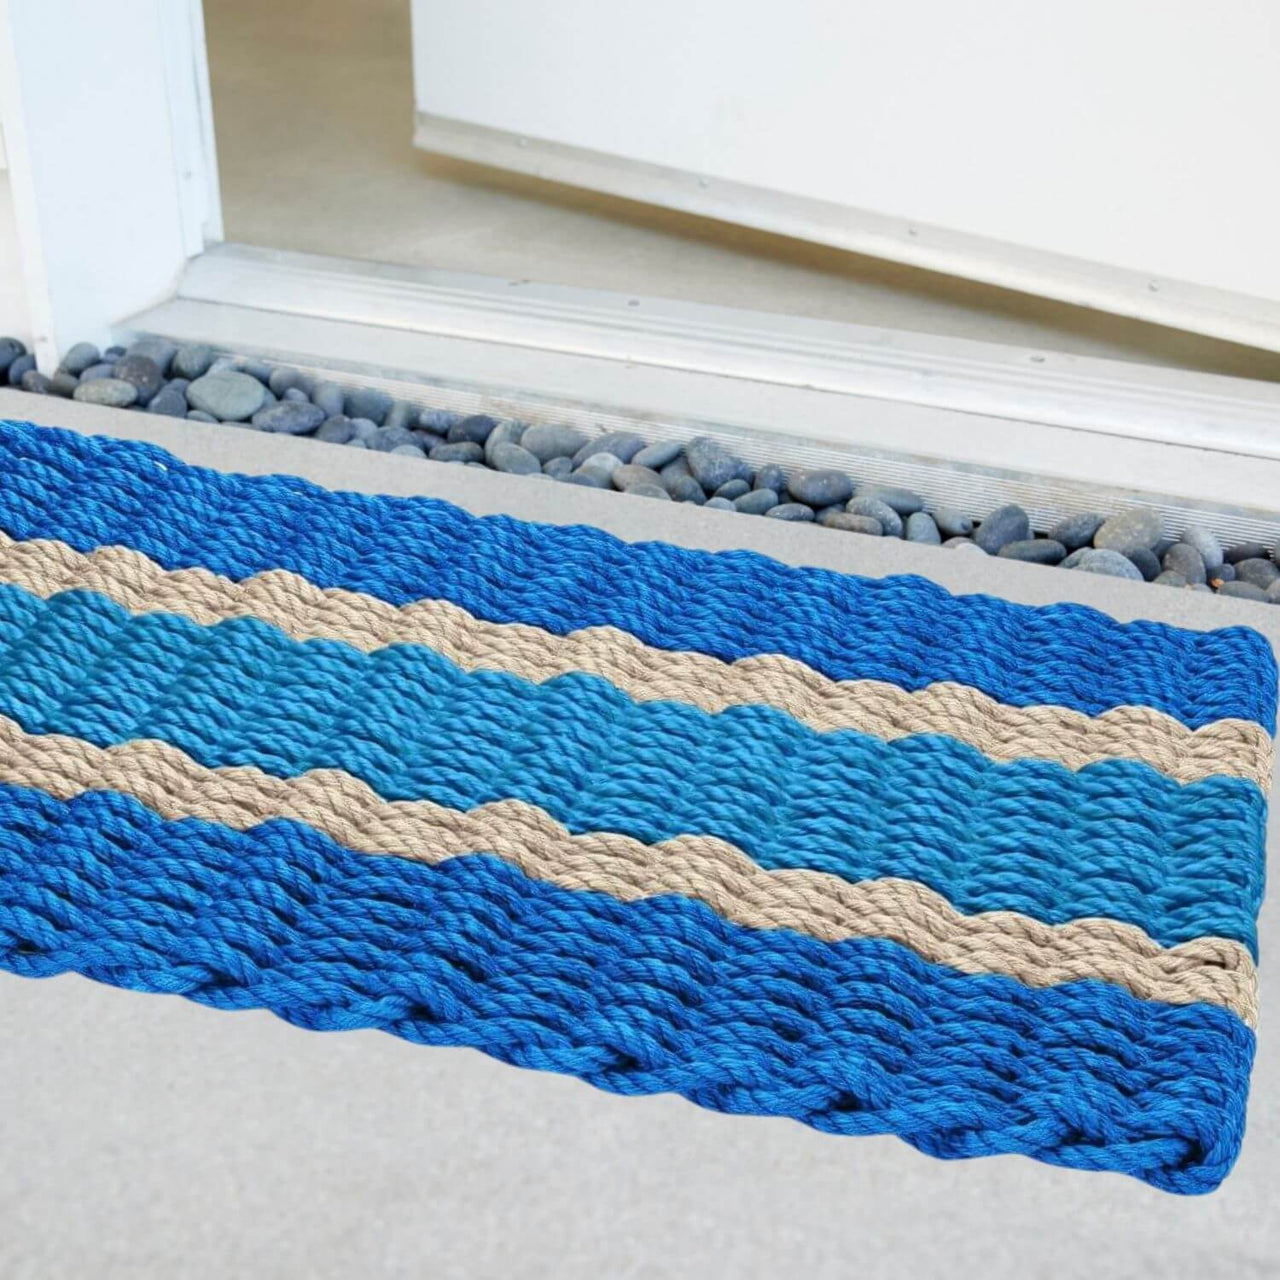 Lobster Rope Doormat, Teal, Seafoam, Blue, Wicked Good Doormats – New  England Trading Co